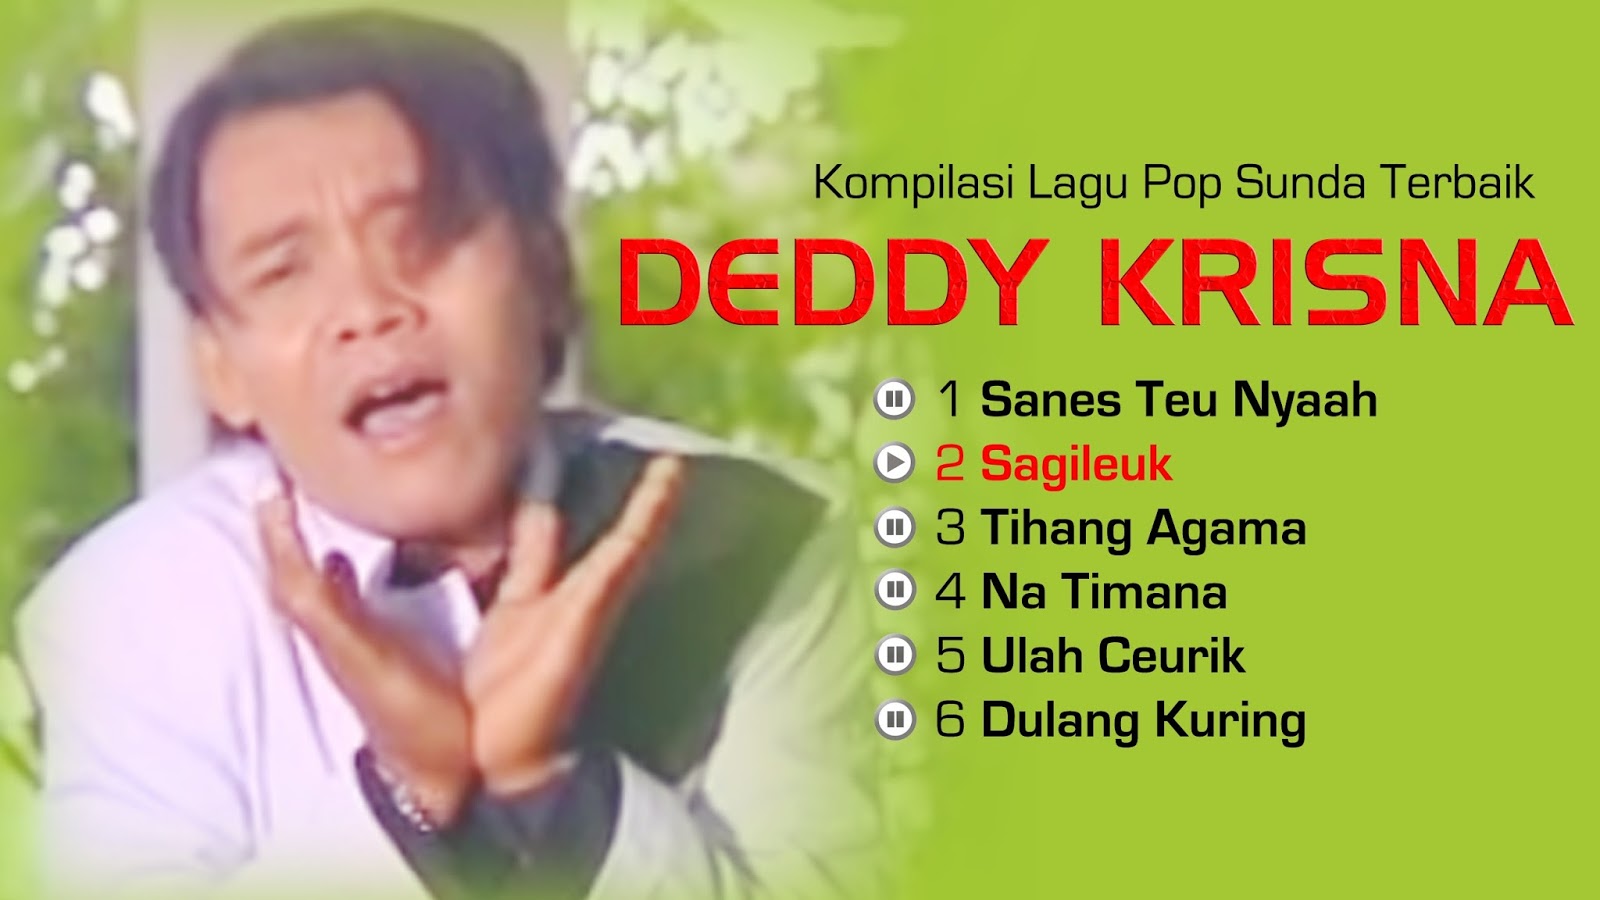 Download Lagu Sunda Deddy Krisna Mp3 Full Album Paling Enak | Lagu Enak121